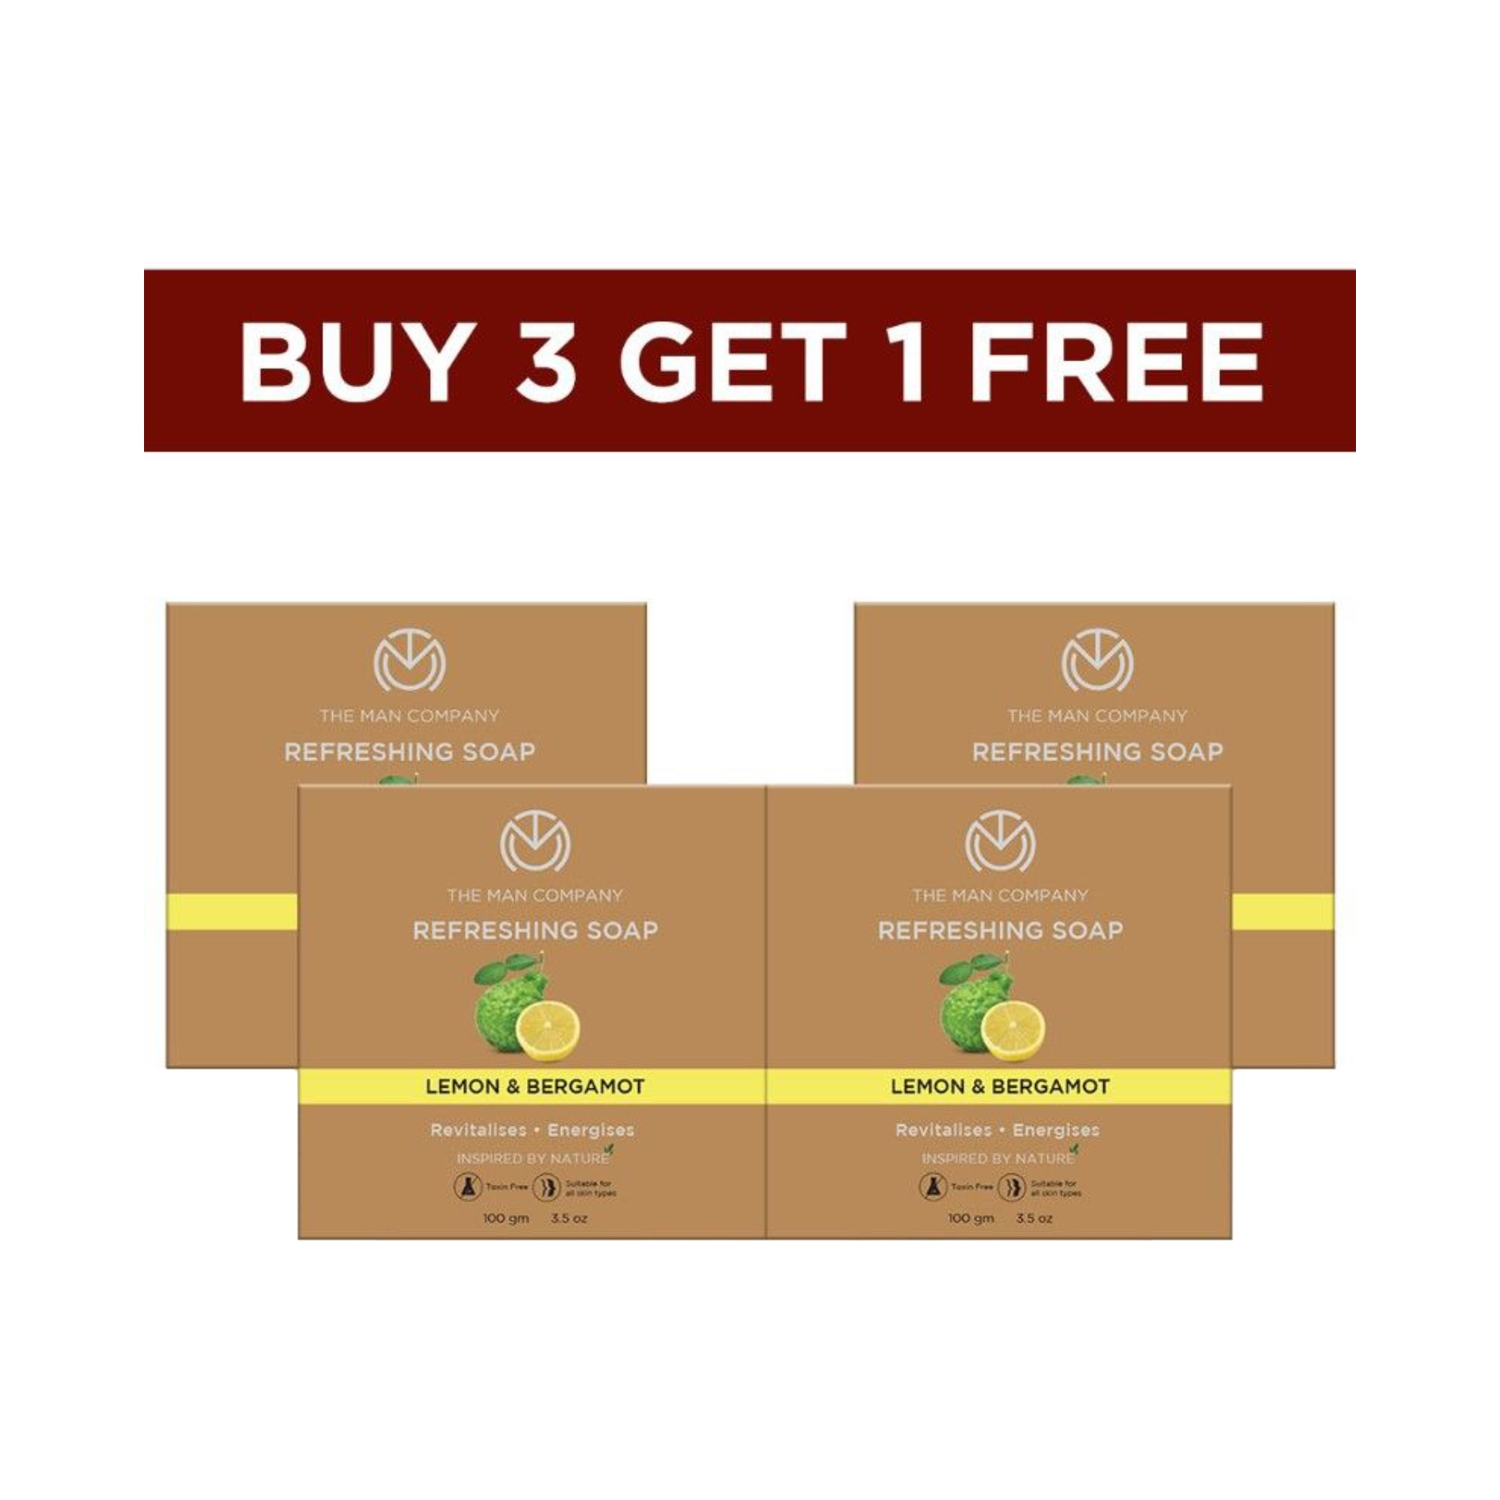 The Man Company | The Man Company Lemon & Bergamot Refreshing Soap Buy 3 Get 1 Free (4Pcs)